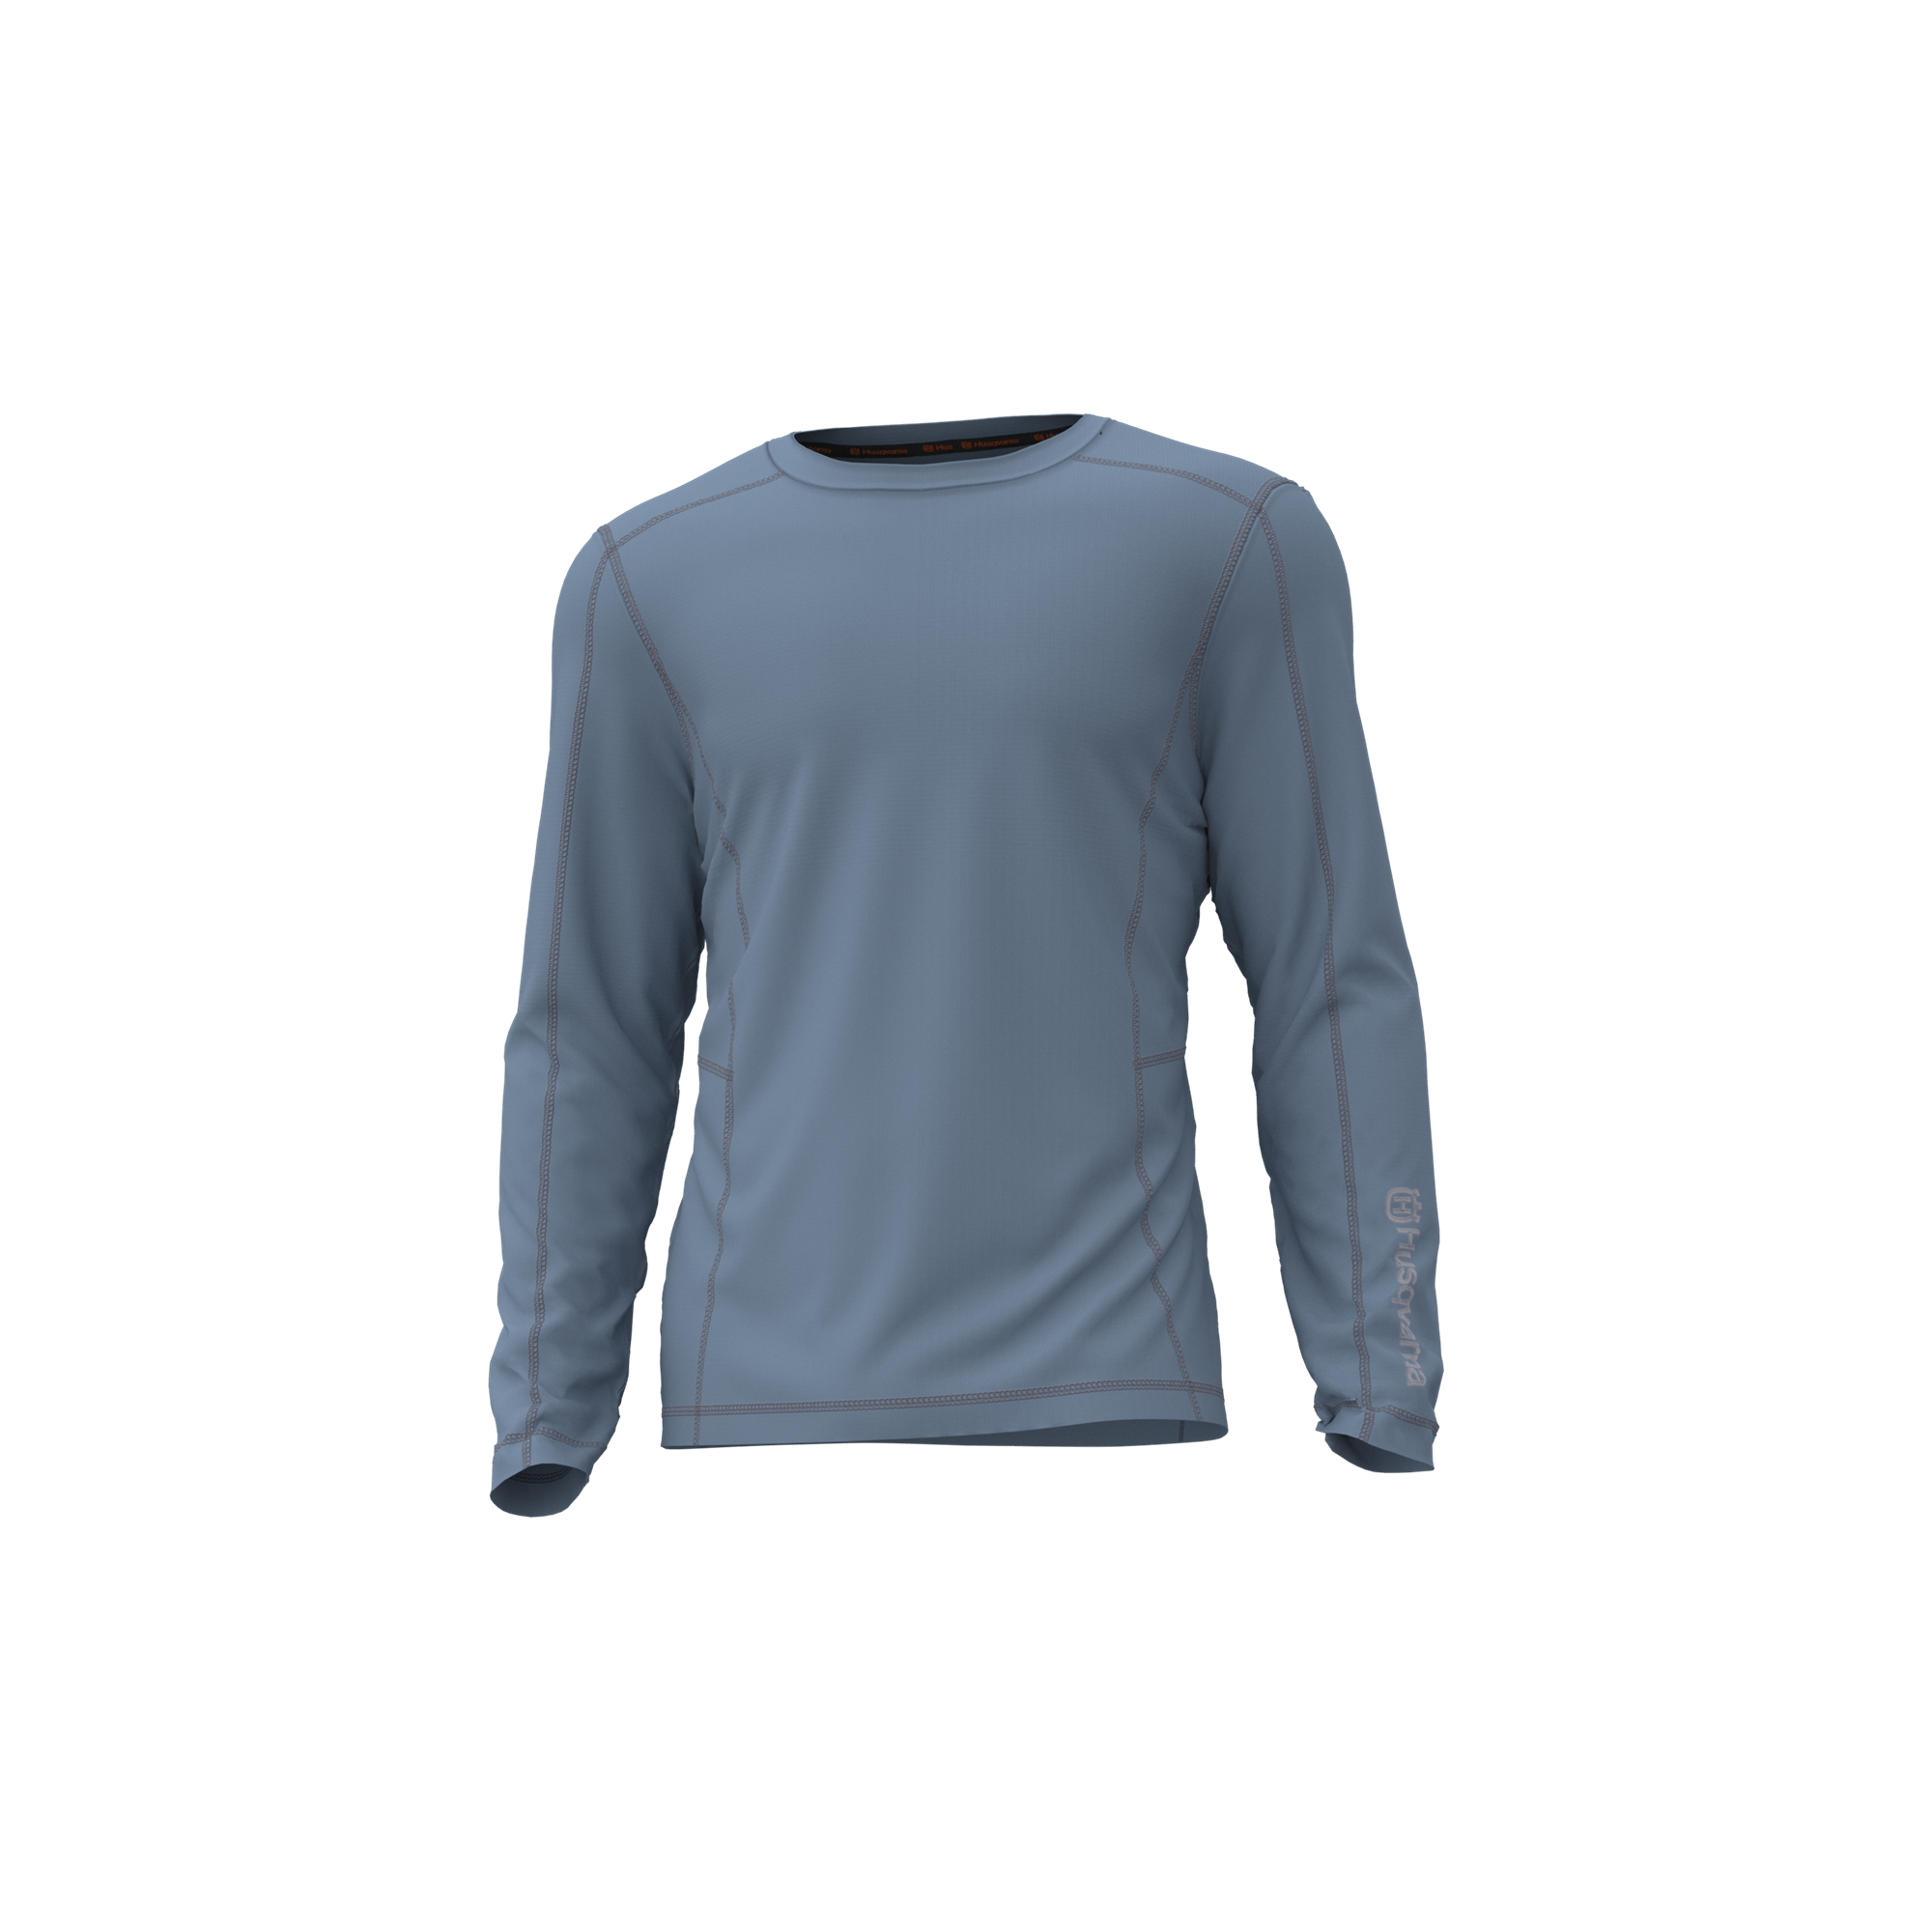 Image for Värme Long-Sleeve Performance Shirt from HusqvarnaB2C